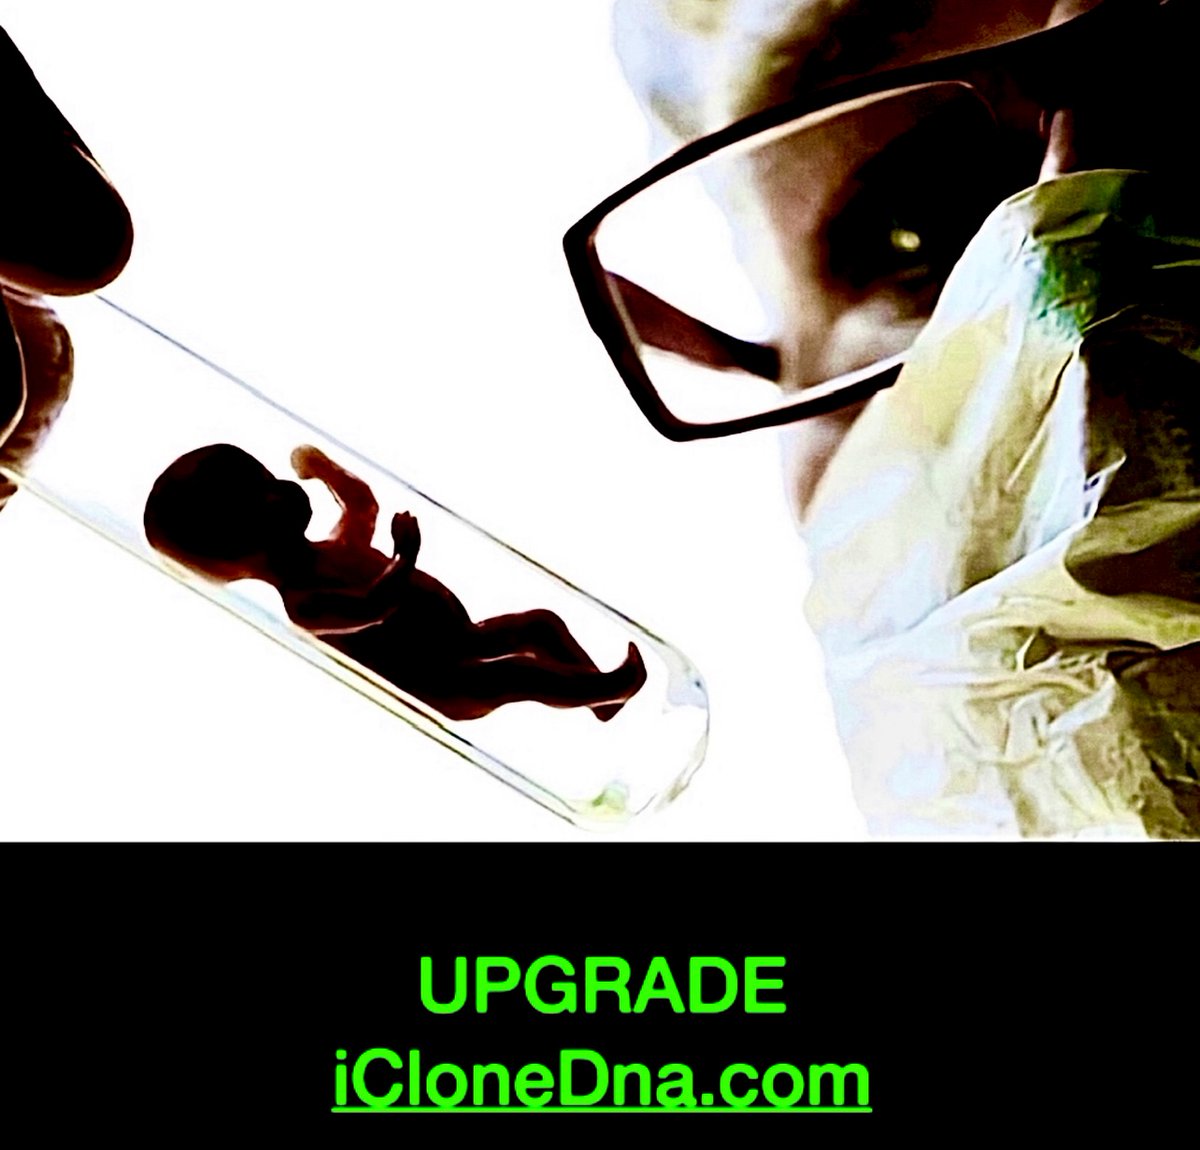 #Biotechnology  #dna #artificalintelligence #chatgpt #ELON #elonmusk #genetics #spacex  #medical #clones  #humans  #cloning  #futurehumans #humanity #fertility #babies #biotech #geneticengineering  #embryos #medicalstudents #life #crispr #crisprcas9 #stemcells #TechInnovation